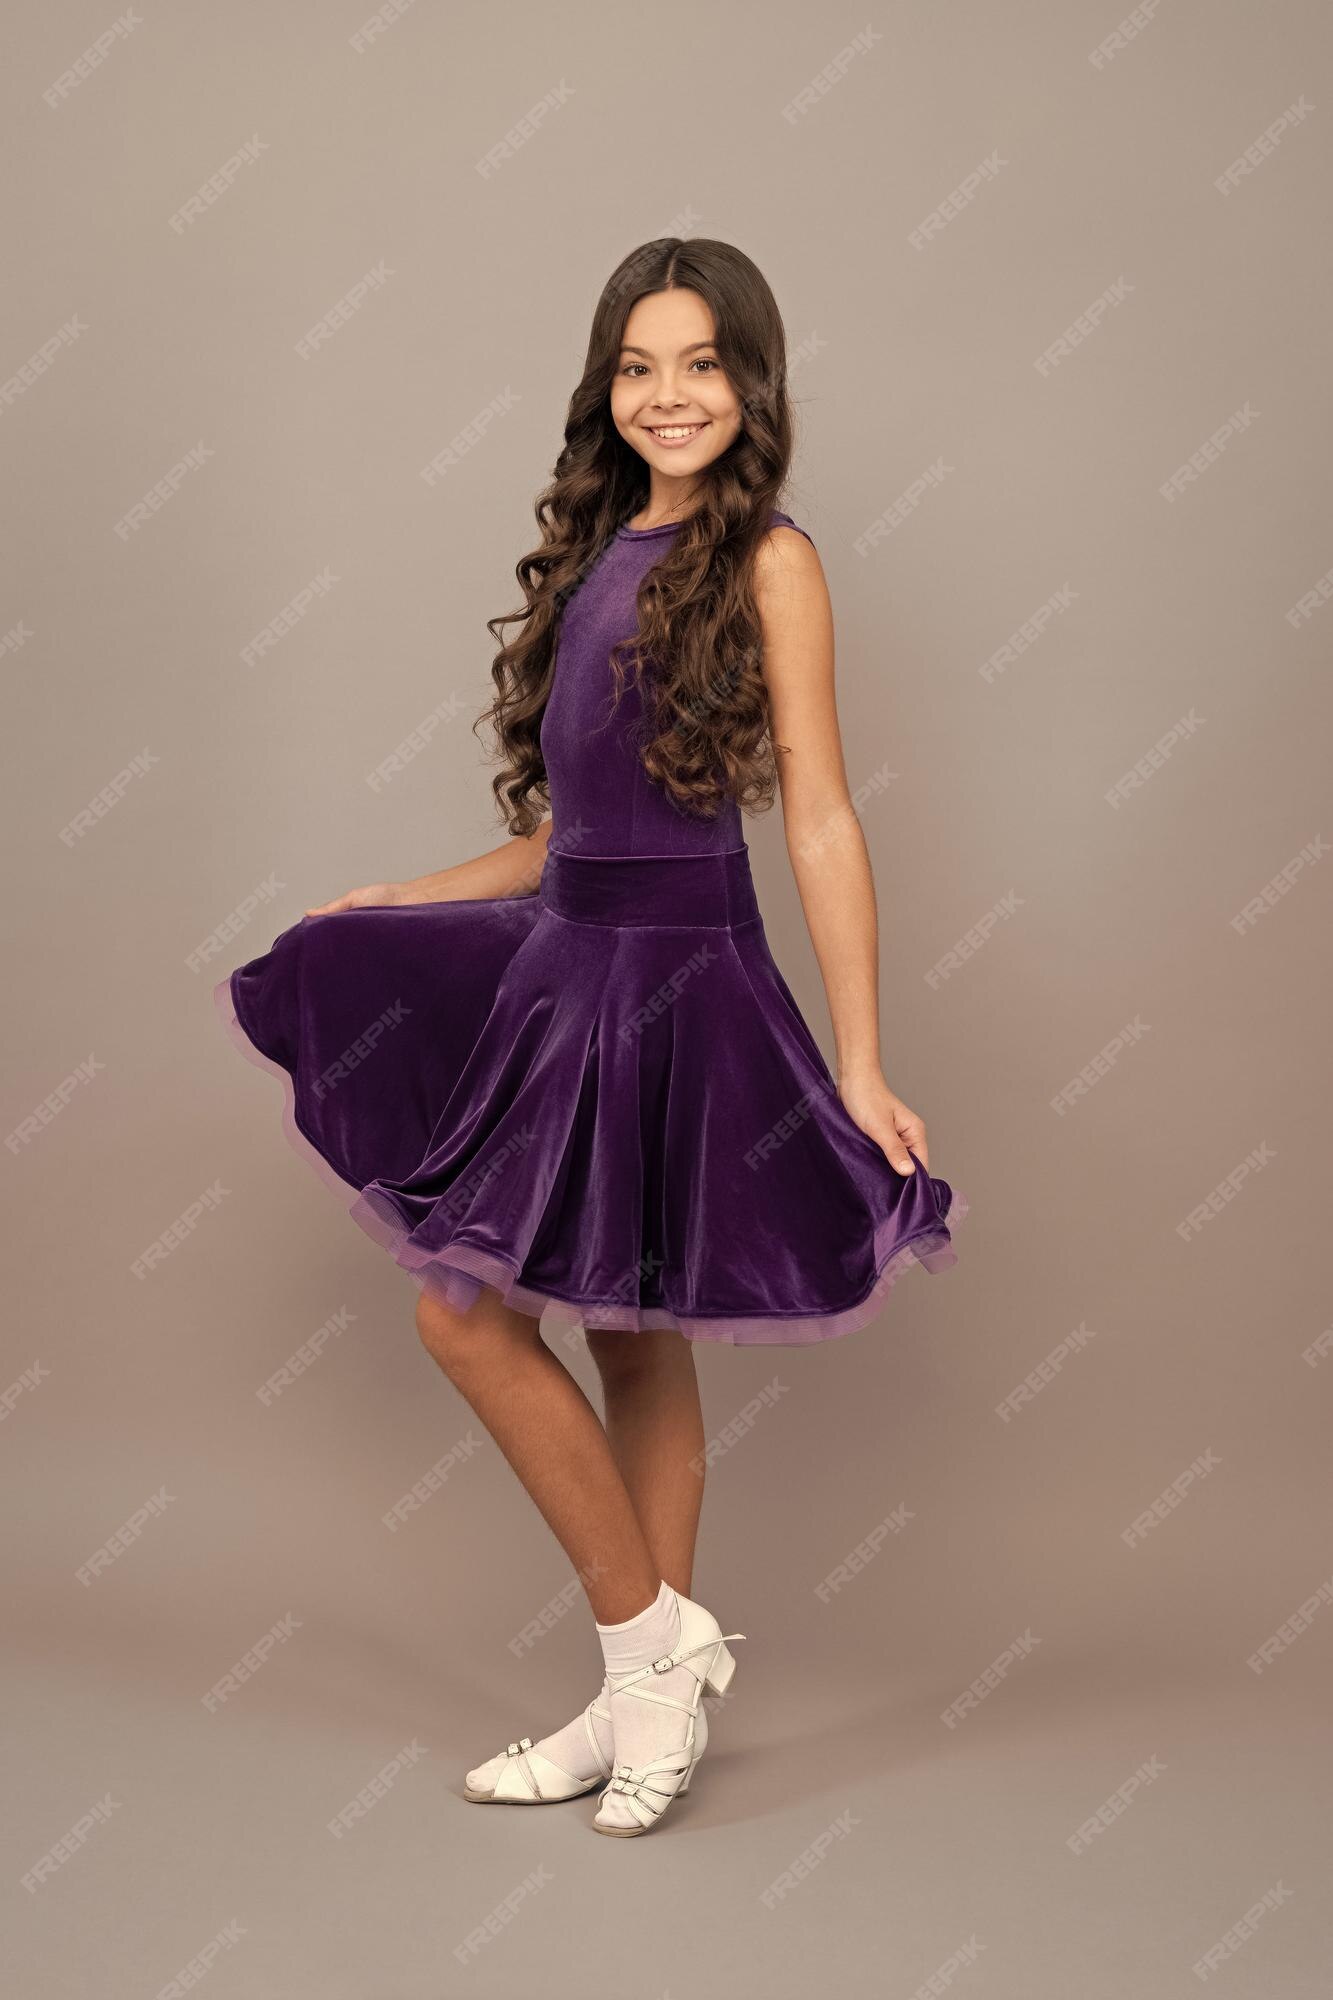 Ropa de baile infantil, ropa moda, bailarina de junior para niña adolescente feliz | Foto Premium